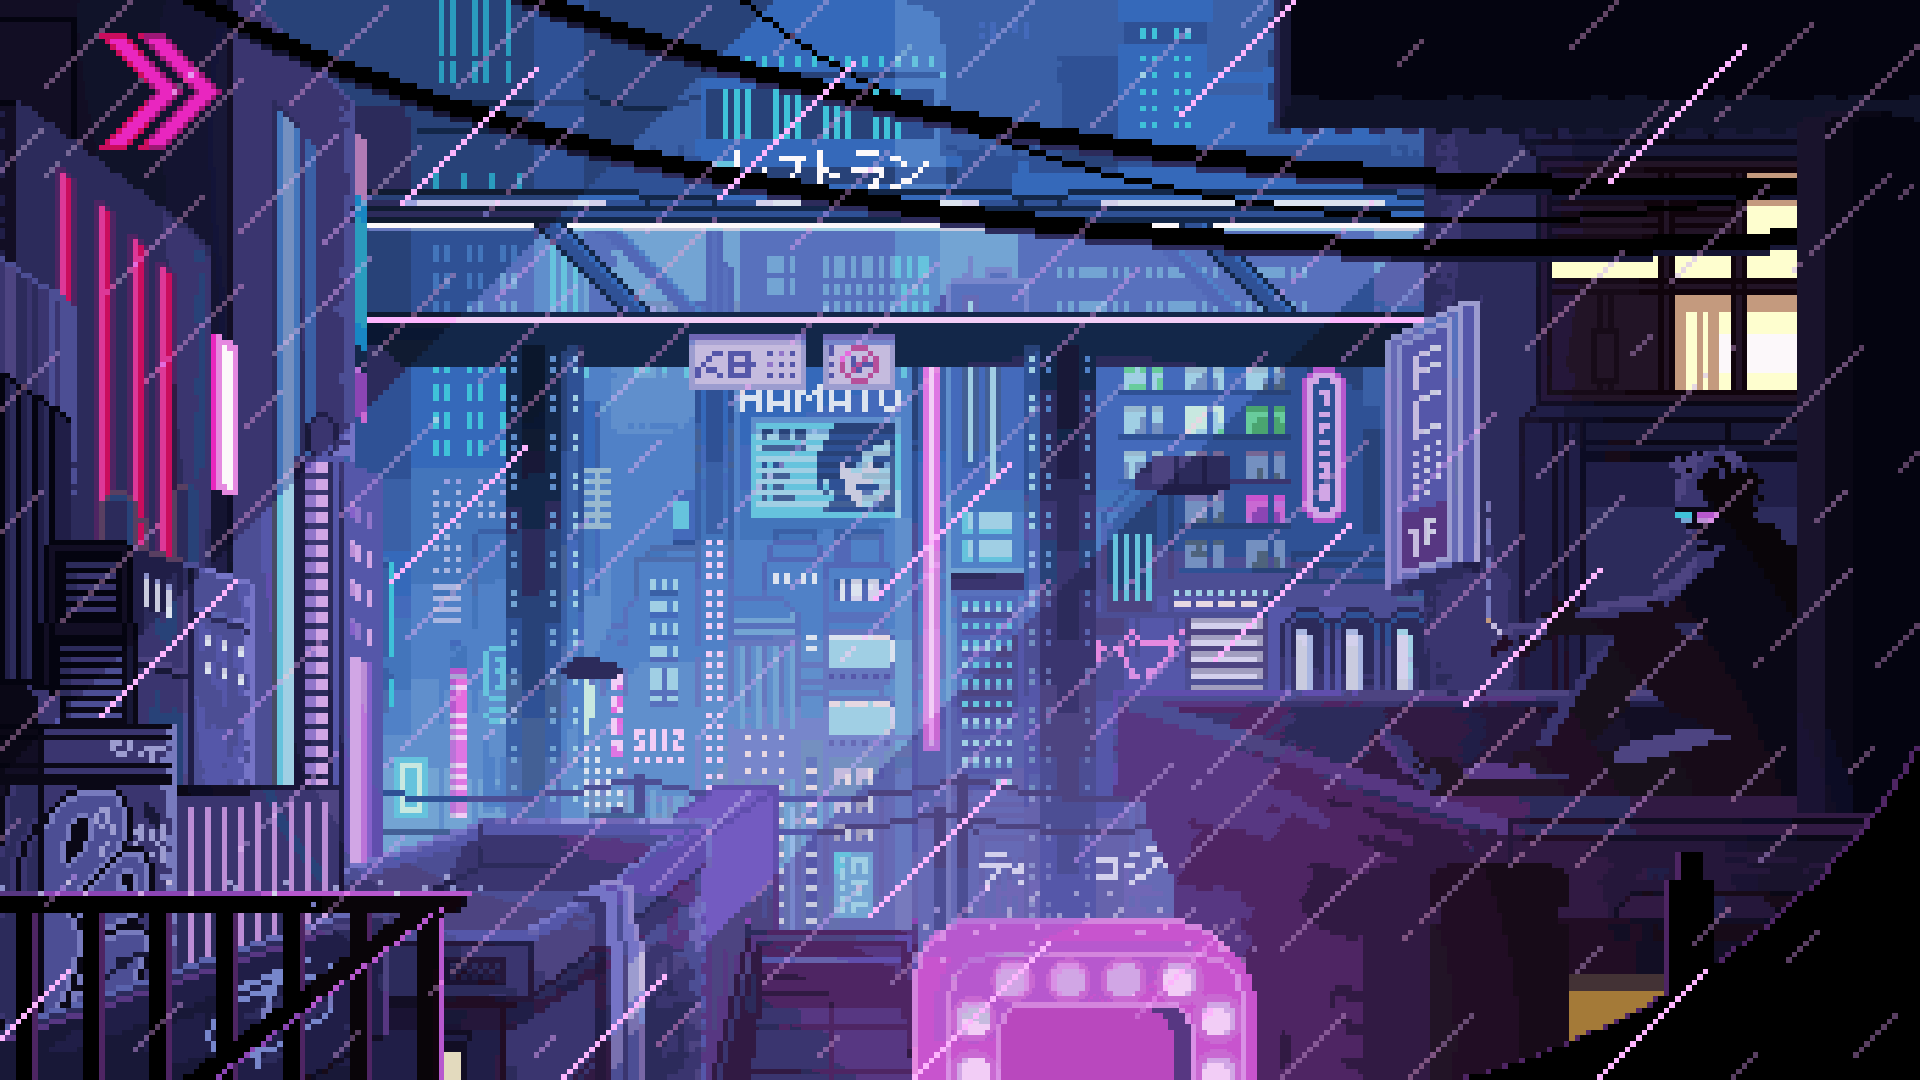 Pixel art cyberpunk city at night with neon lights and rain. - Windows 10